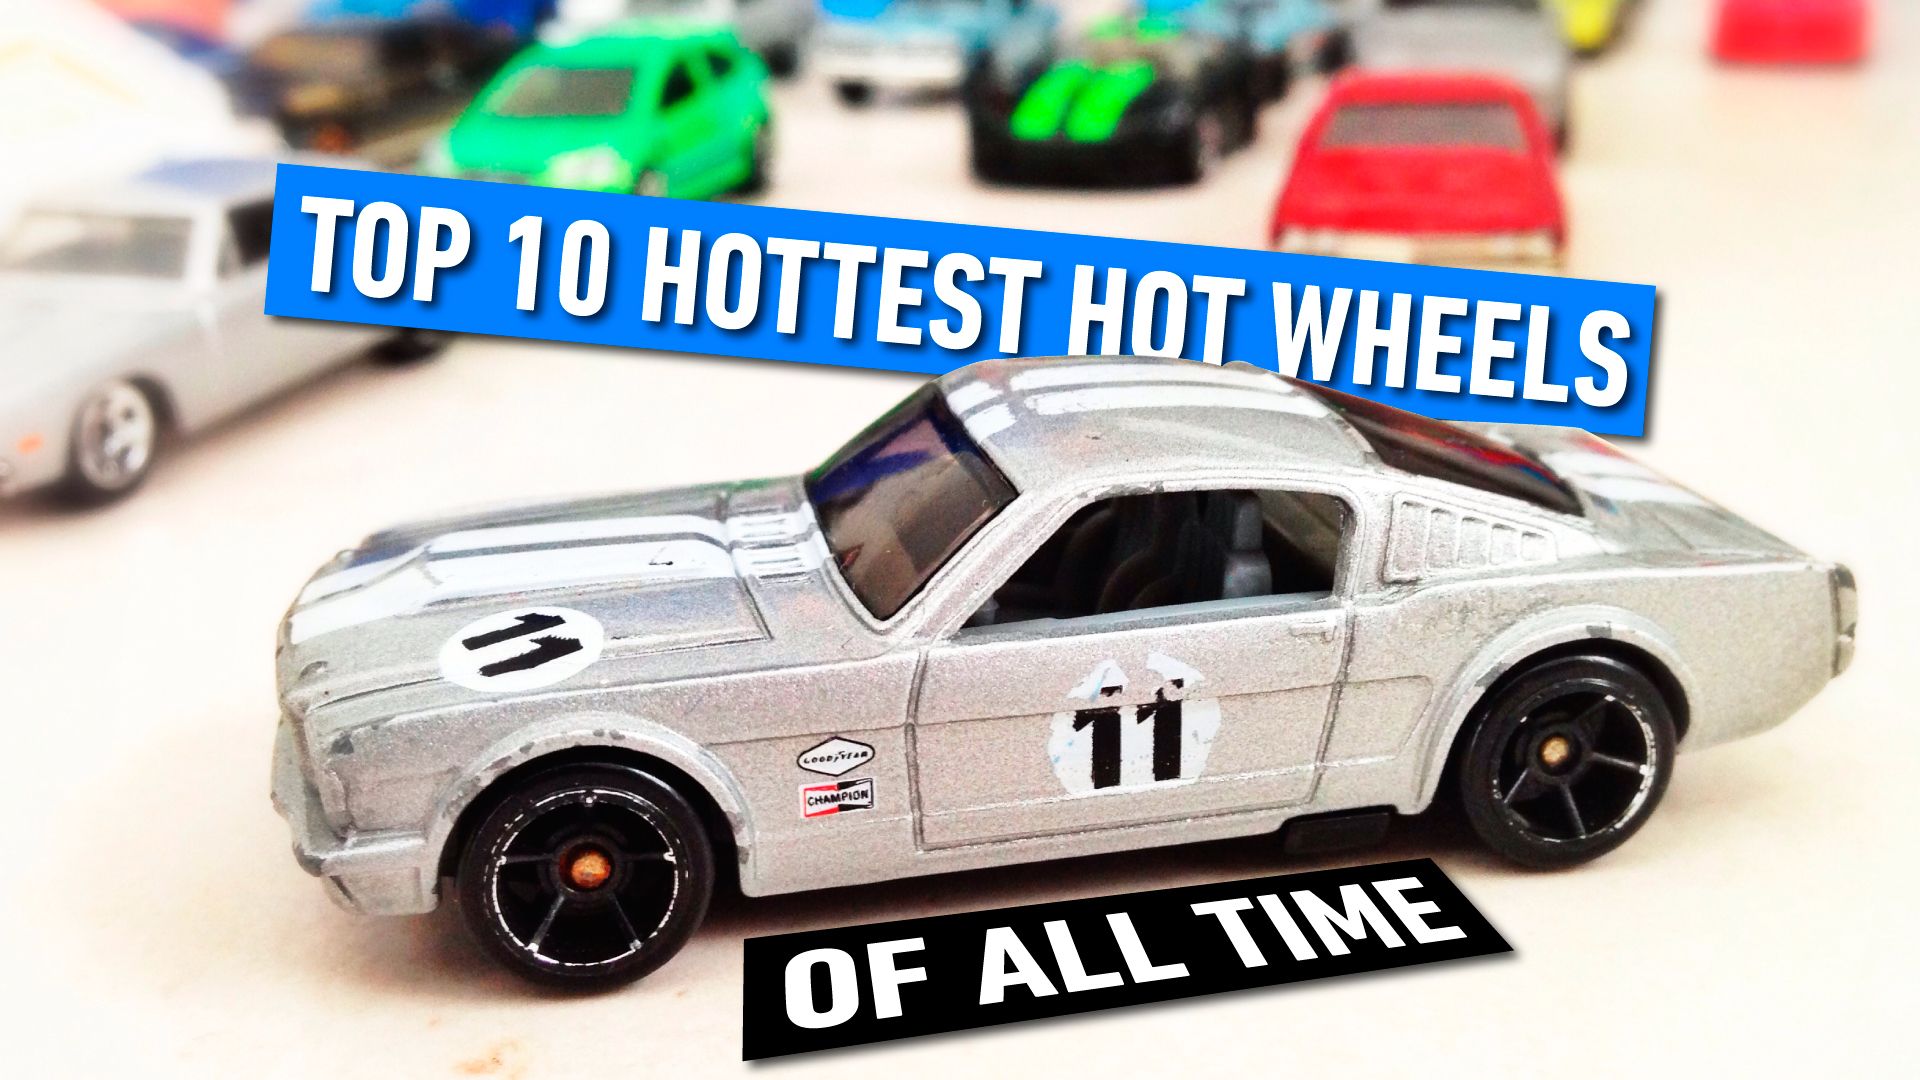 2015 Hot Wheels Race Team Series Set of 5 Cars All Brand New: Chevy Corvette